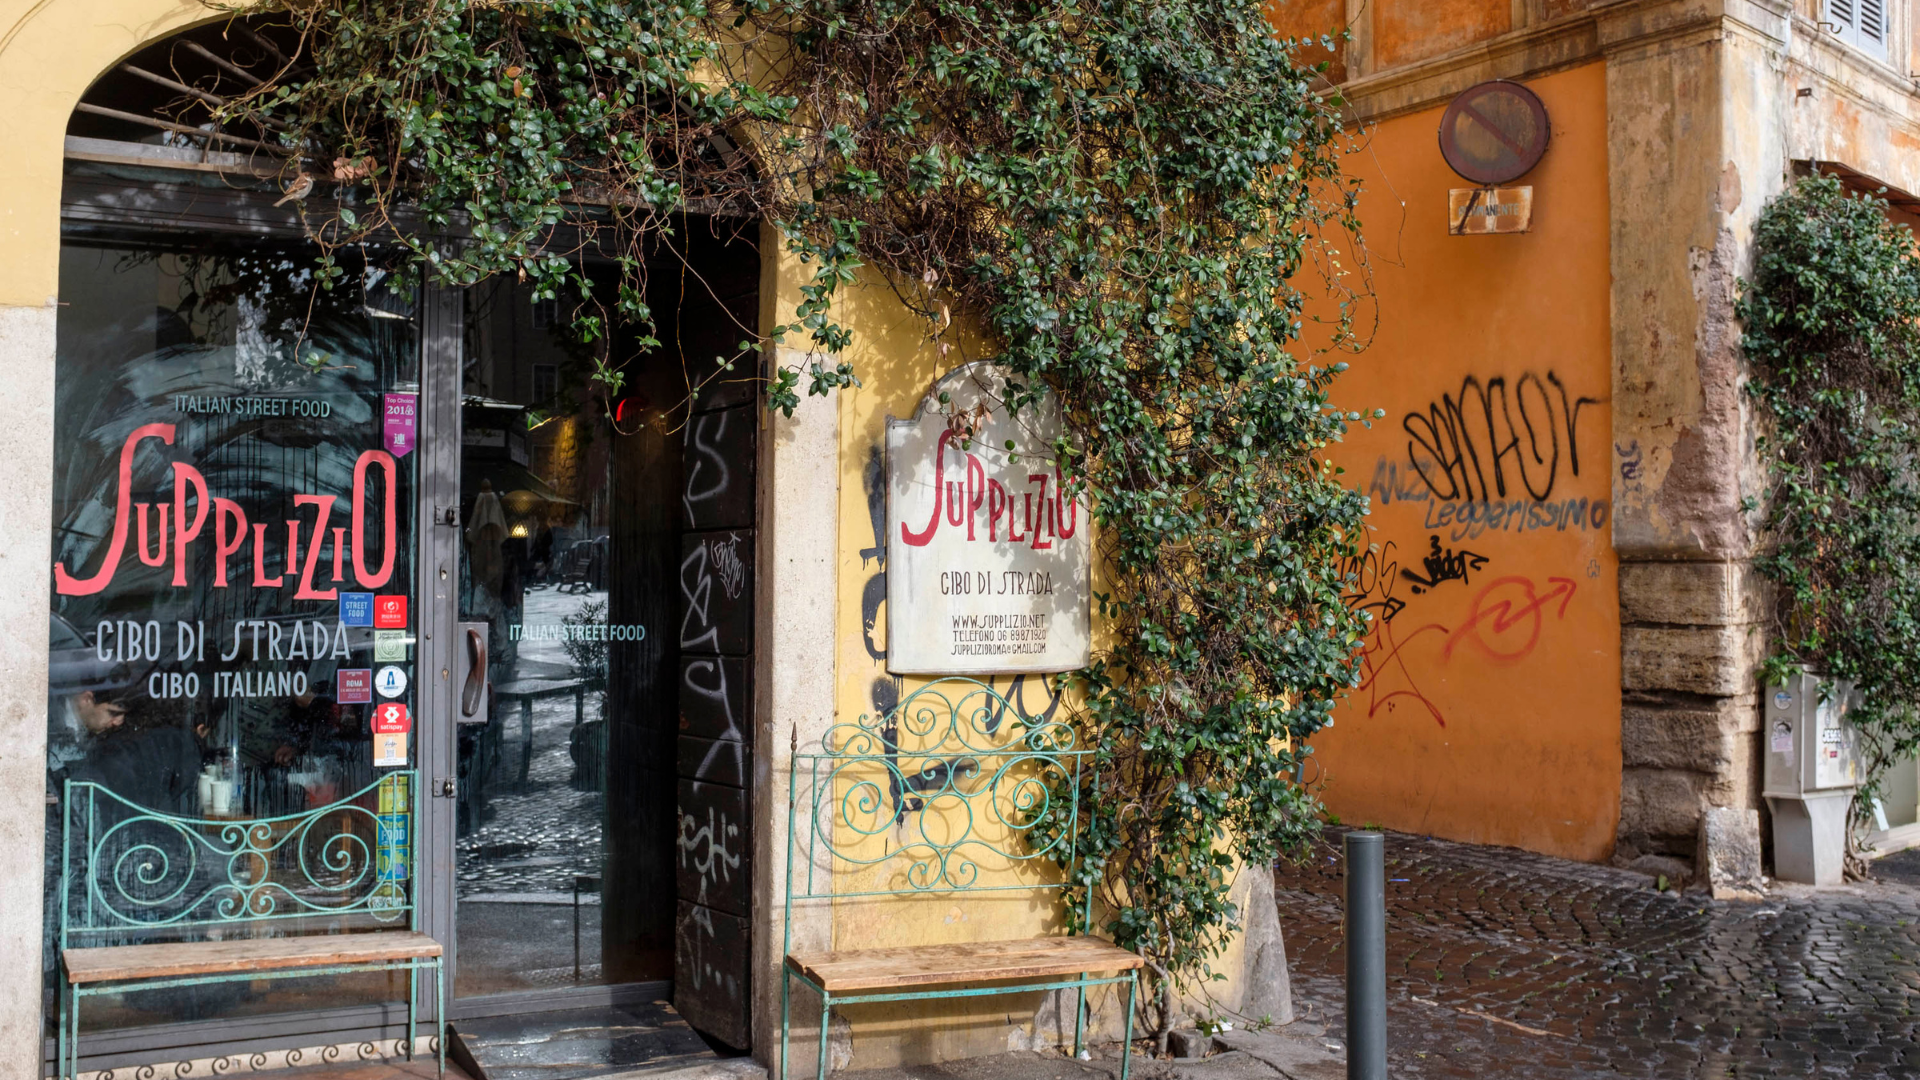 Supplizo a roman street food restaurant